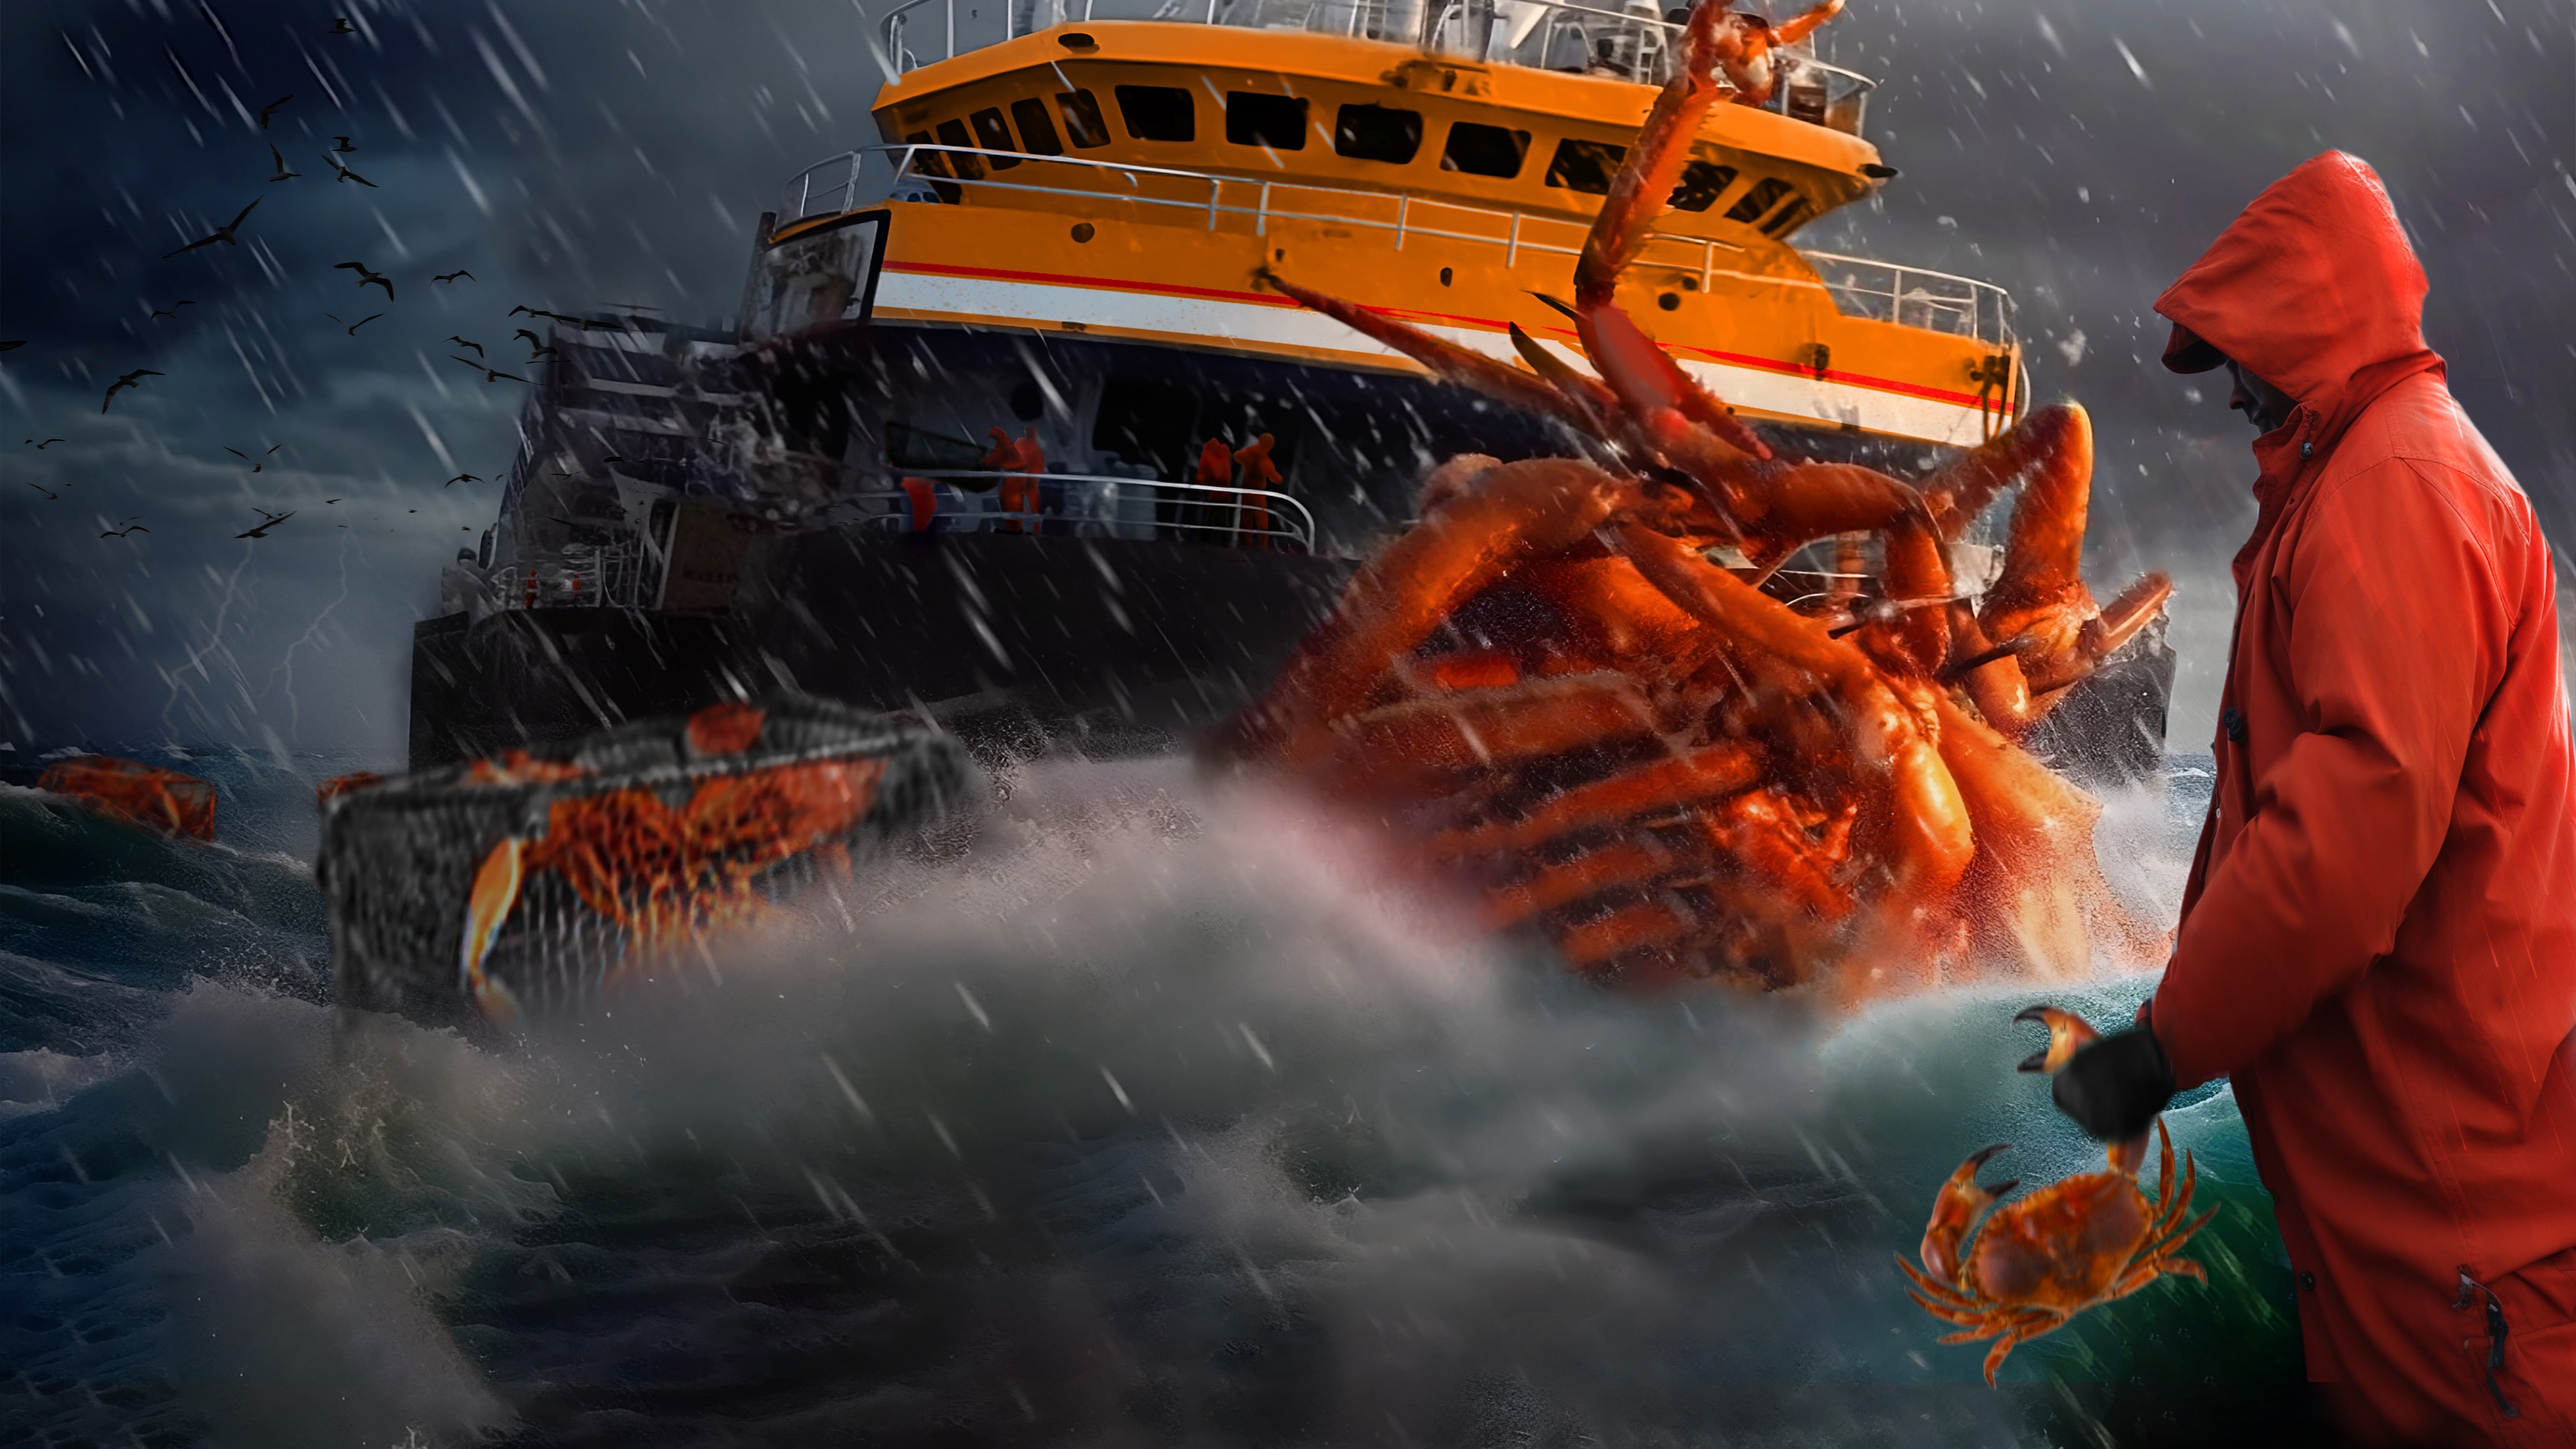 01 Deadliest Zone Catch — Boat Crab & Fishing Simulator